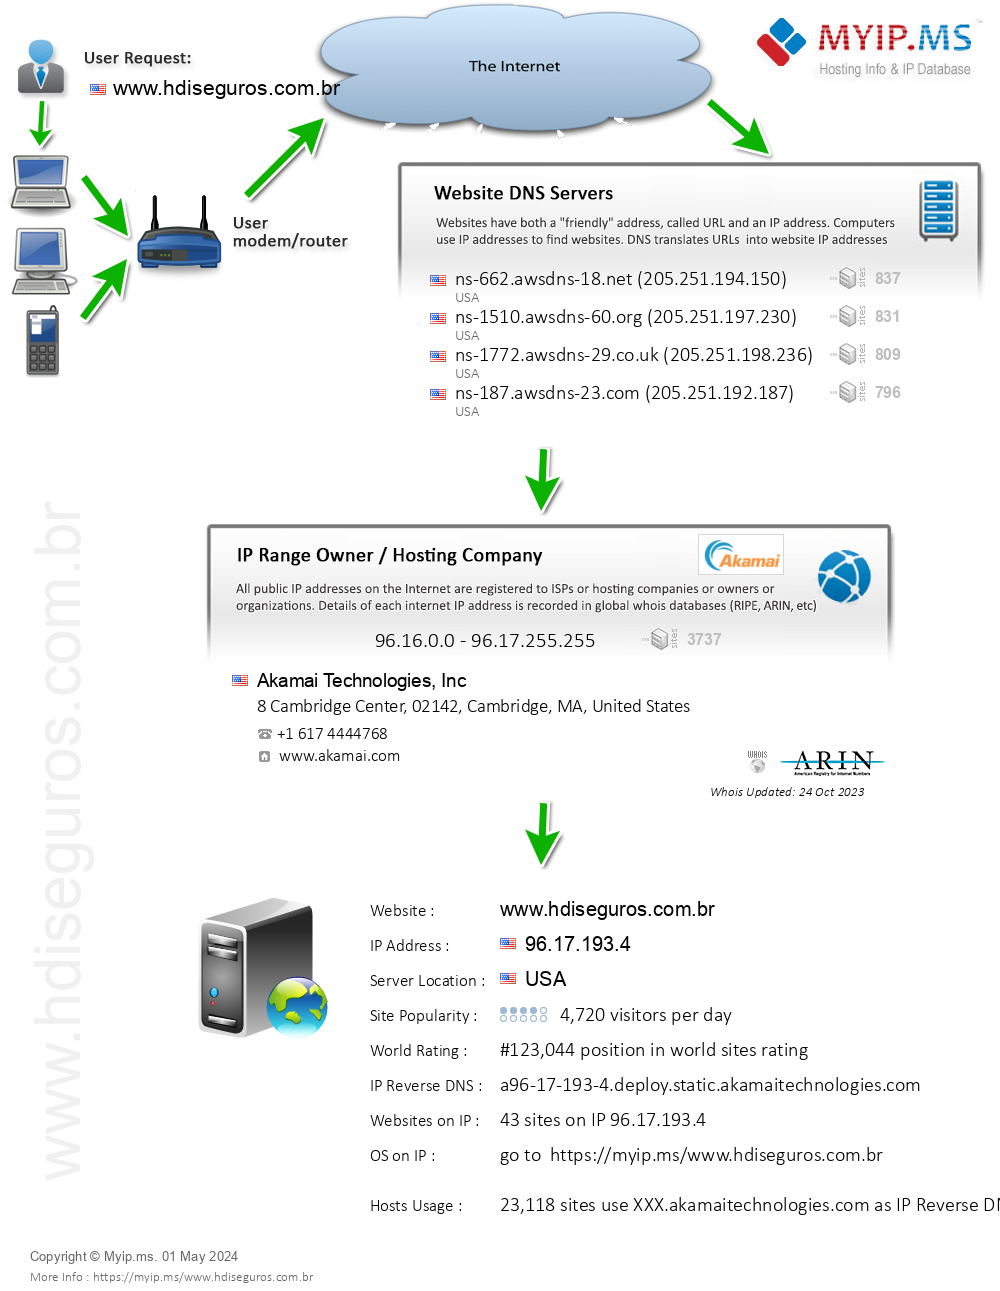 Hdiseguros.com.br - Website Hosting Visual IP Diagram